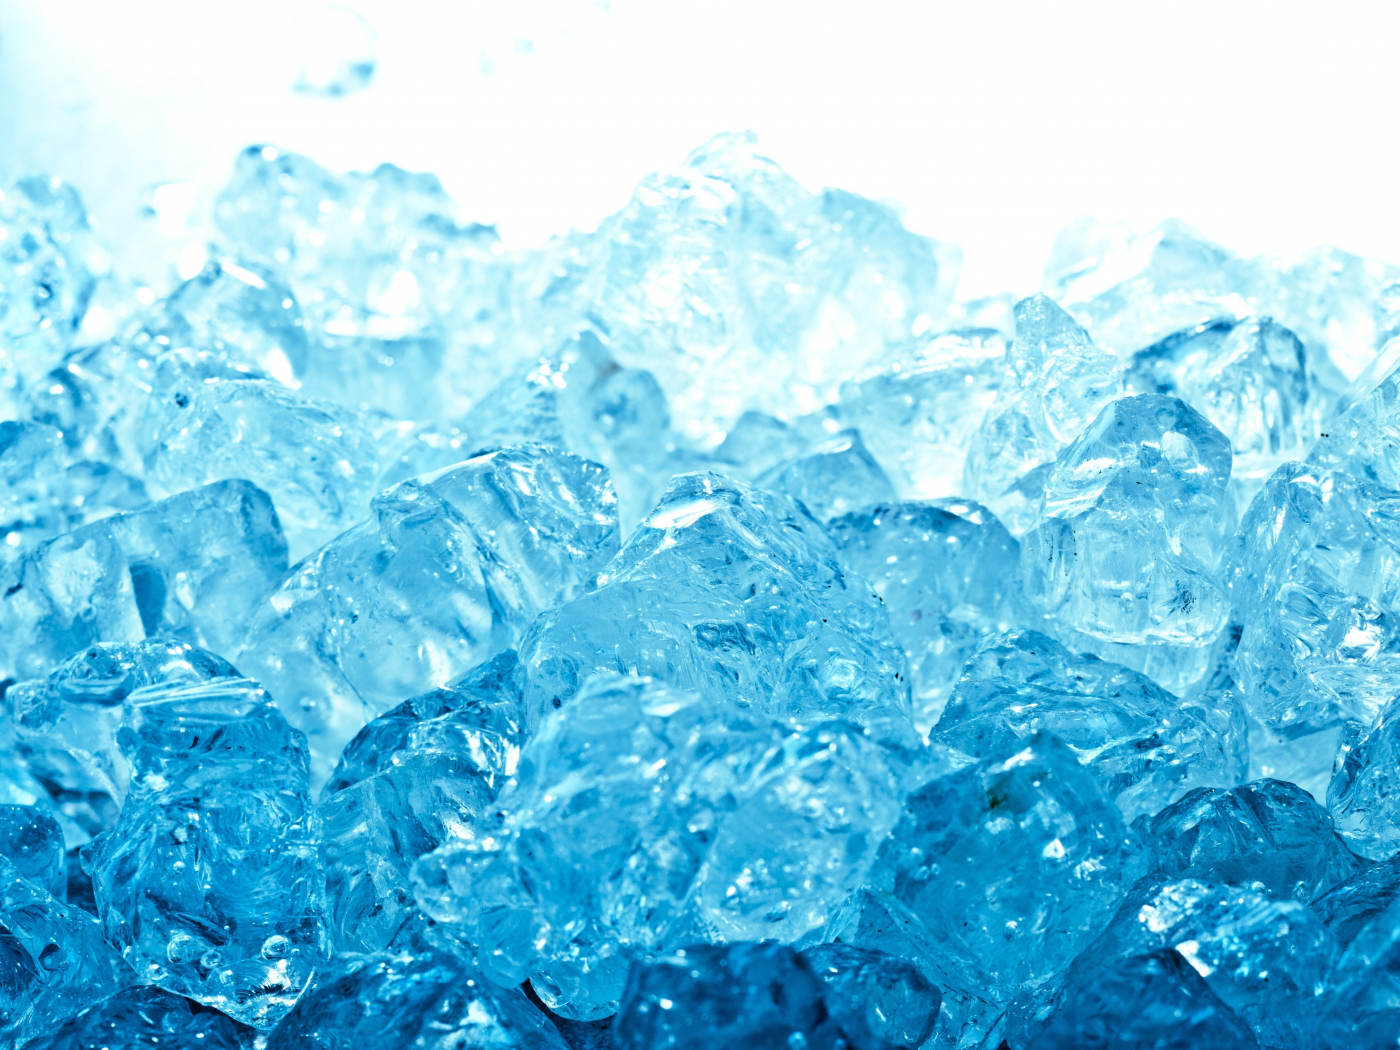 кубики, лед, голубой, синий, вода, макро